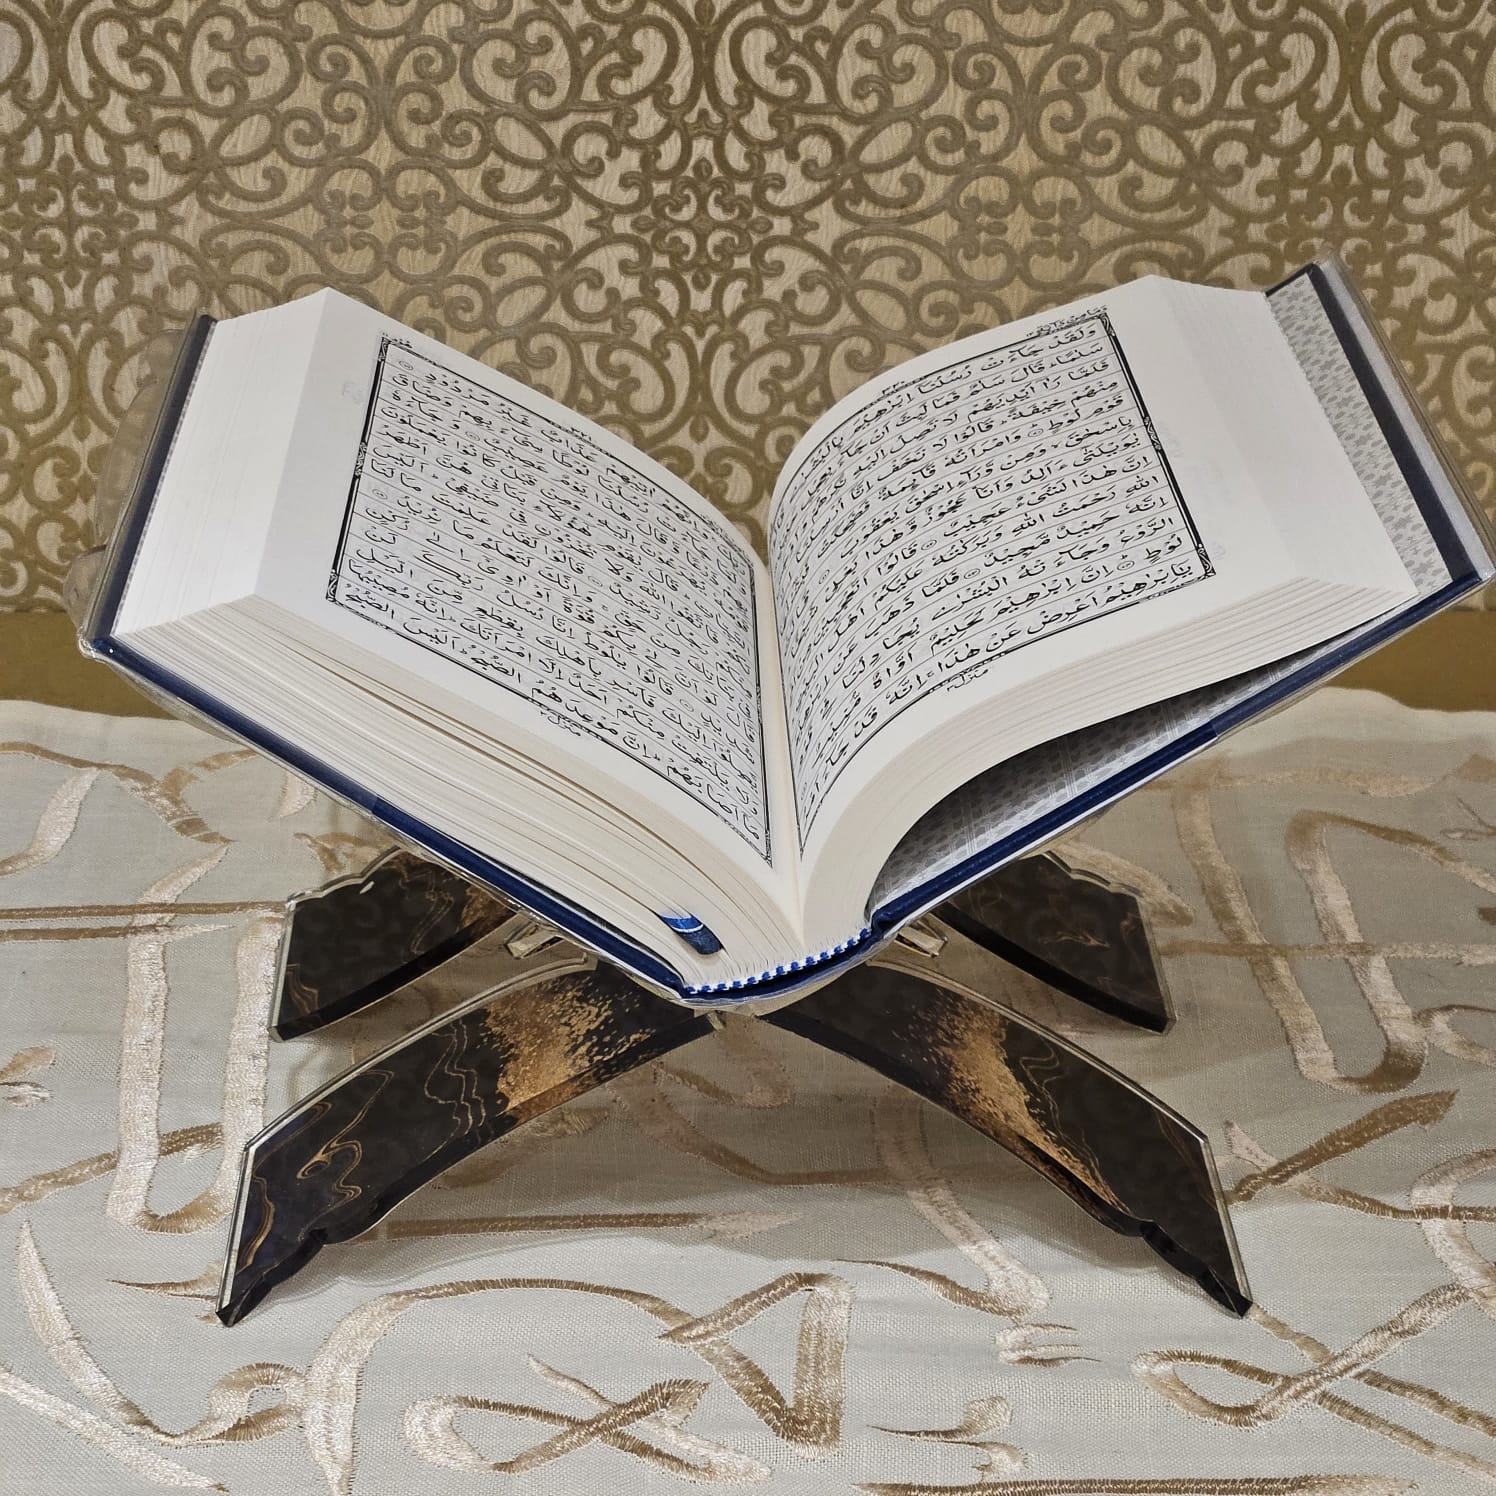 Izimo ze-Perspex Quran (9 Imibala)